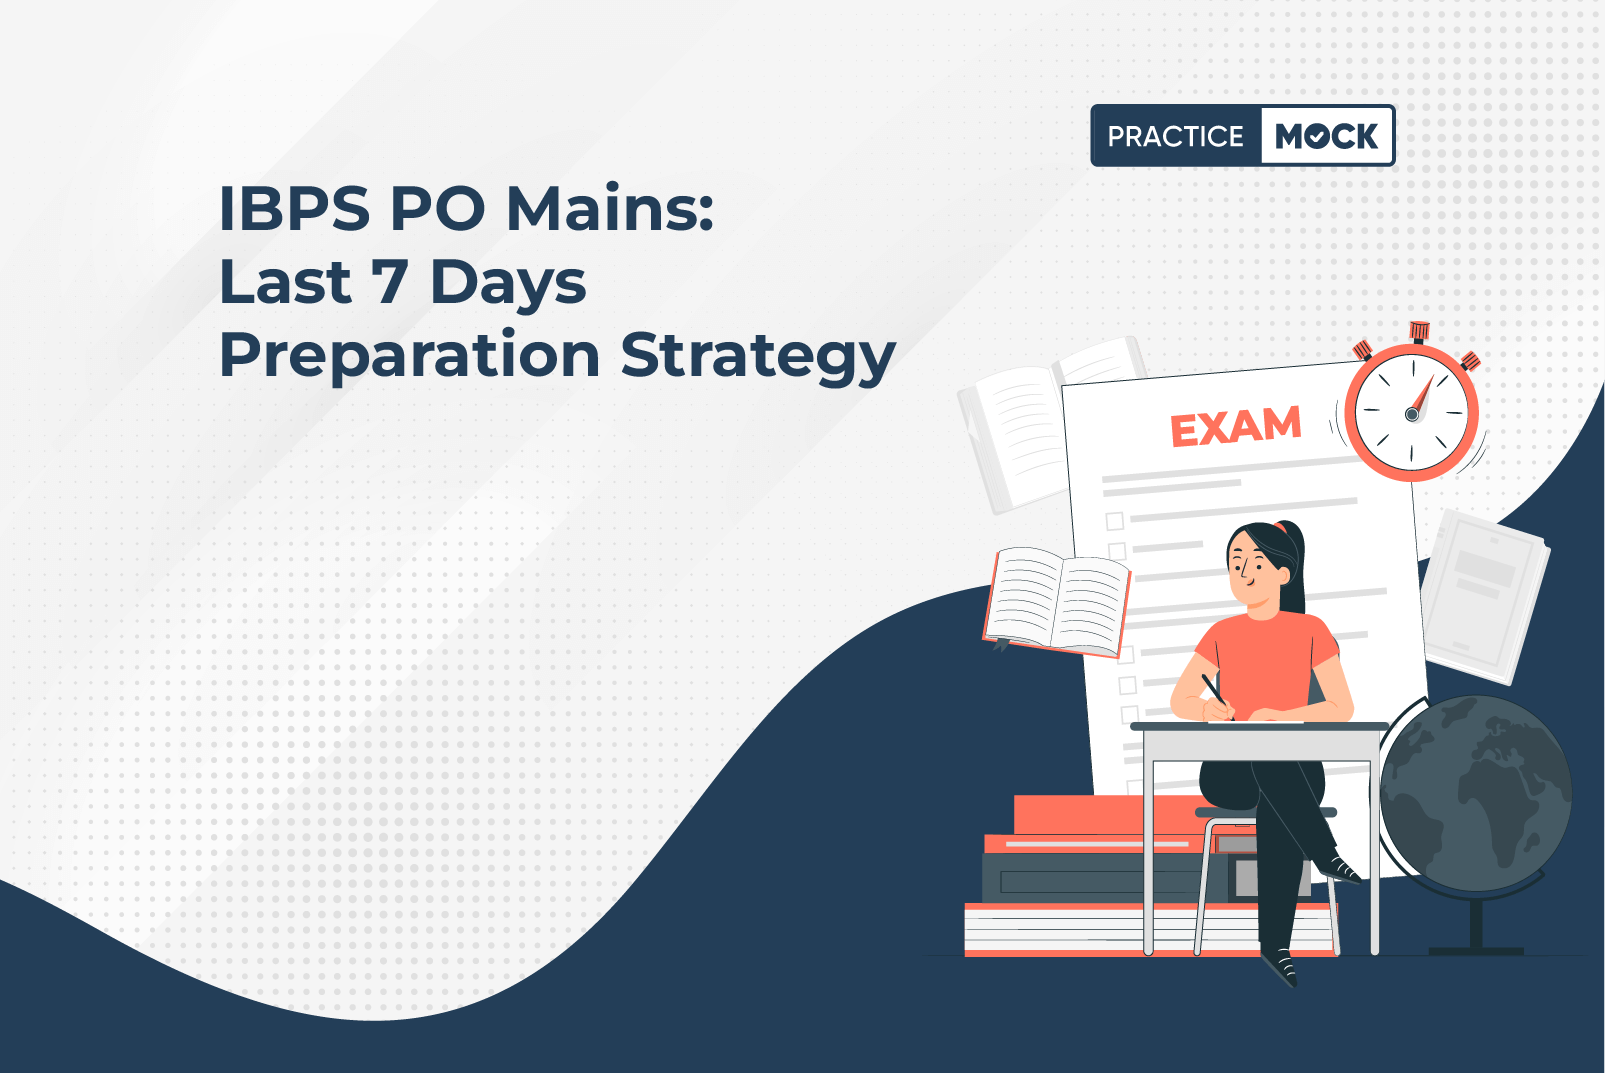 IBPS PO Mains: Last 7 Days Preparation Strategy